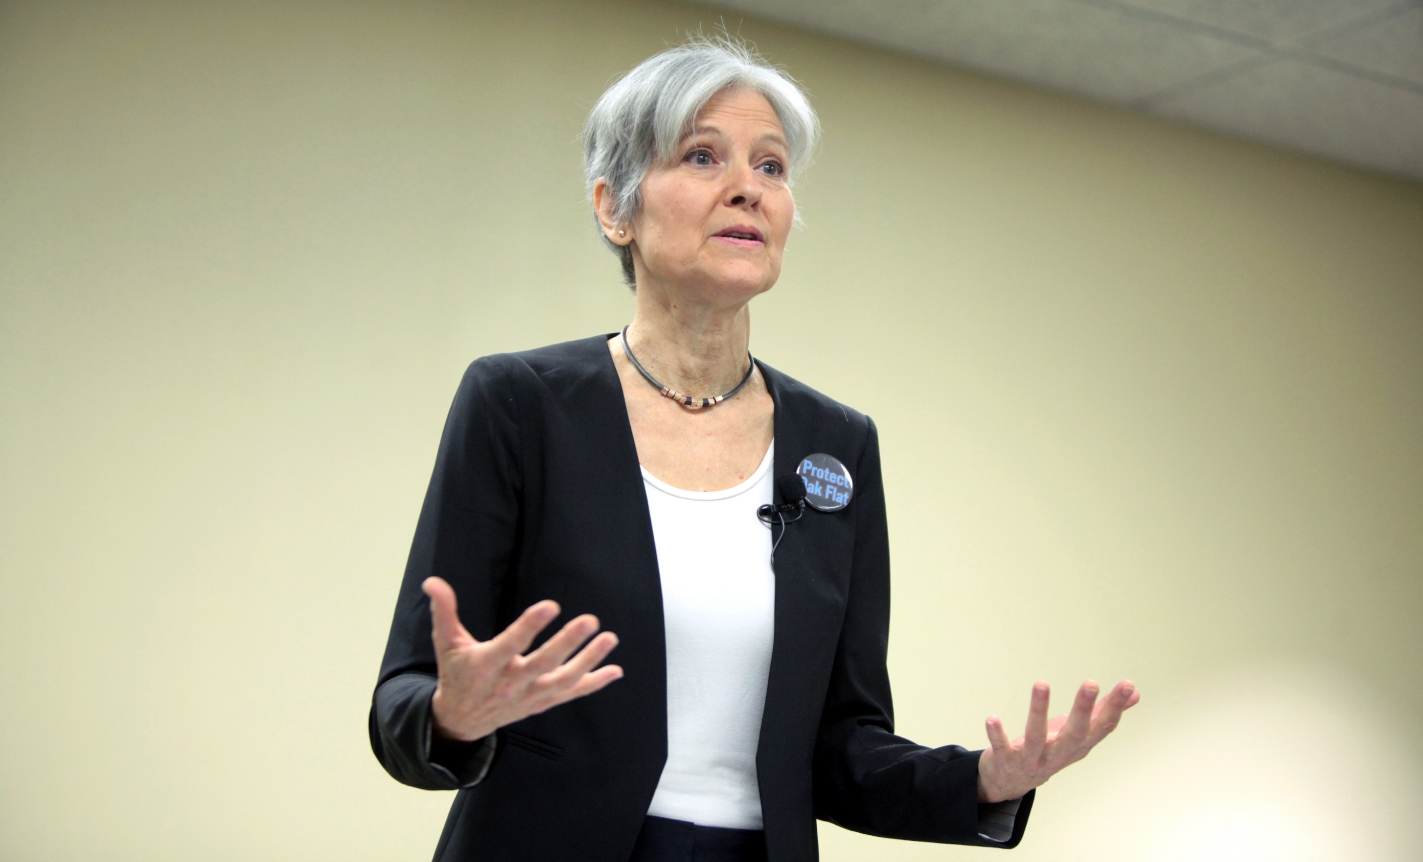 Texans favor “Deez Nuts” over Jill Stein for president